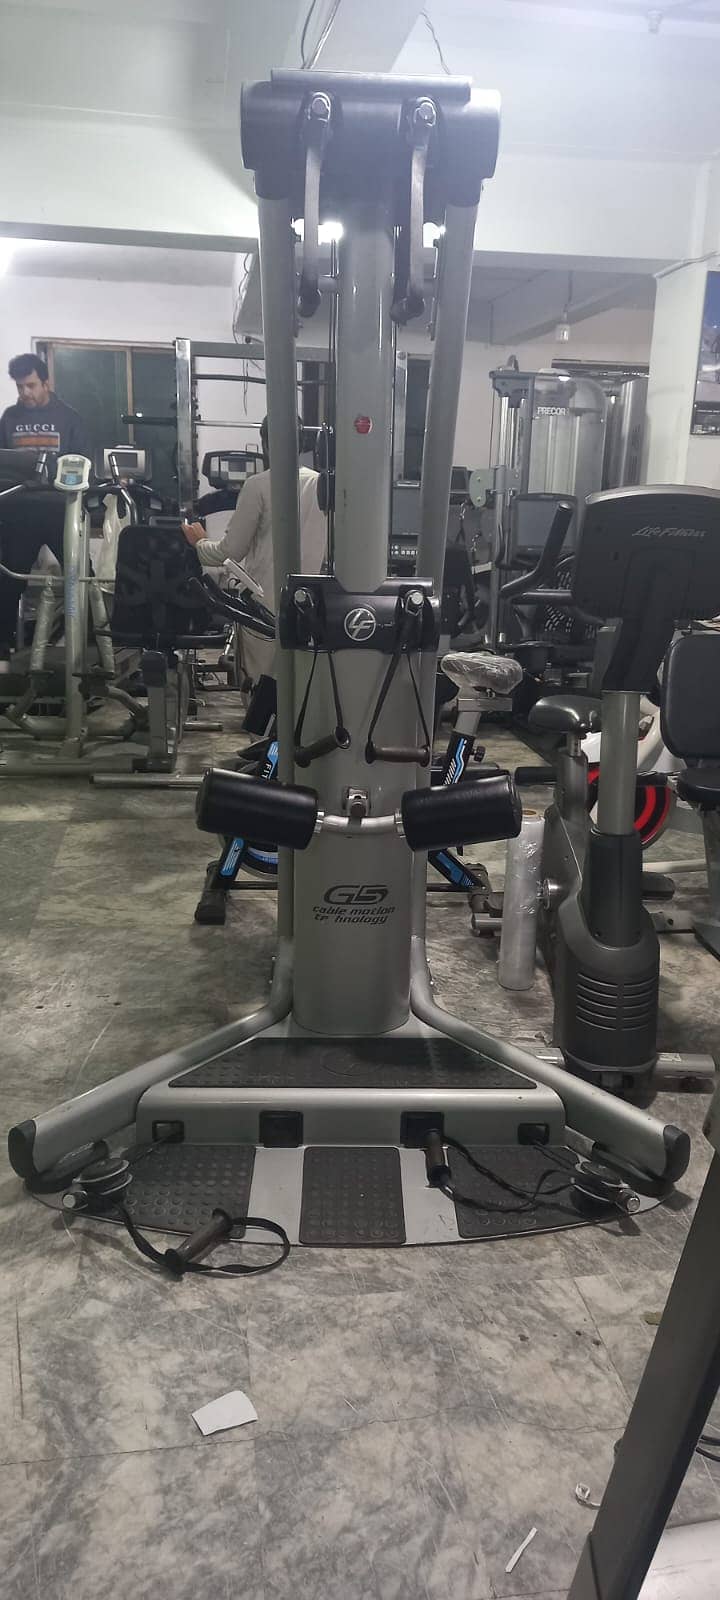 multi functional machine dumbbell gym setup treadmill elliptical plate 1